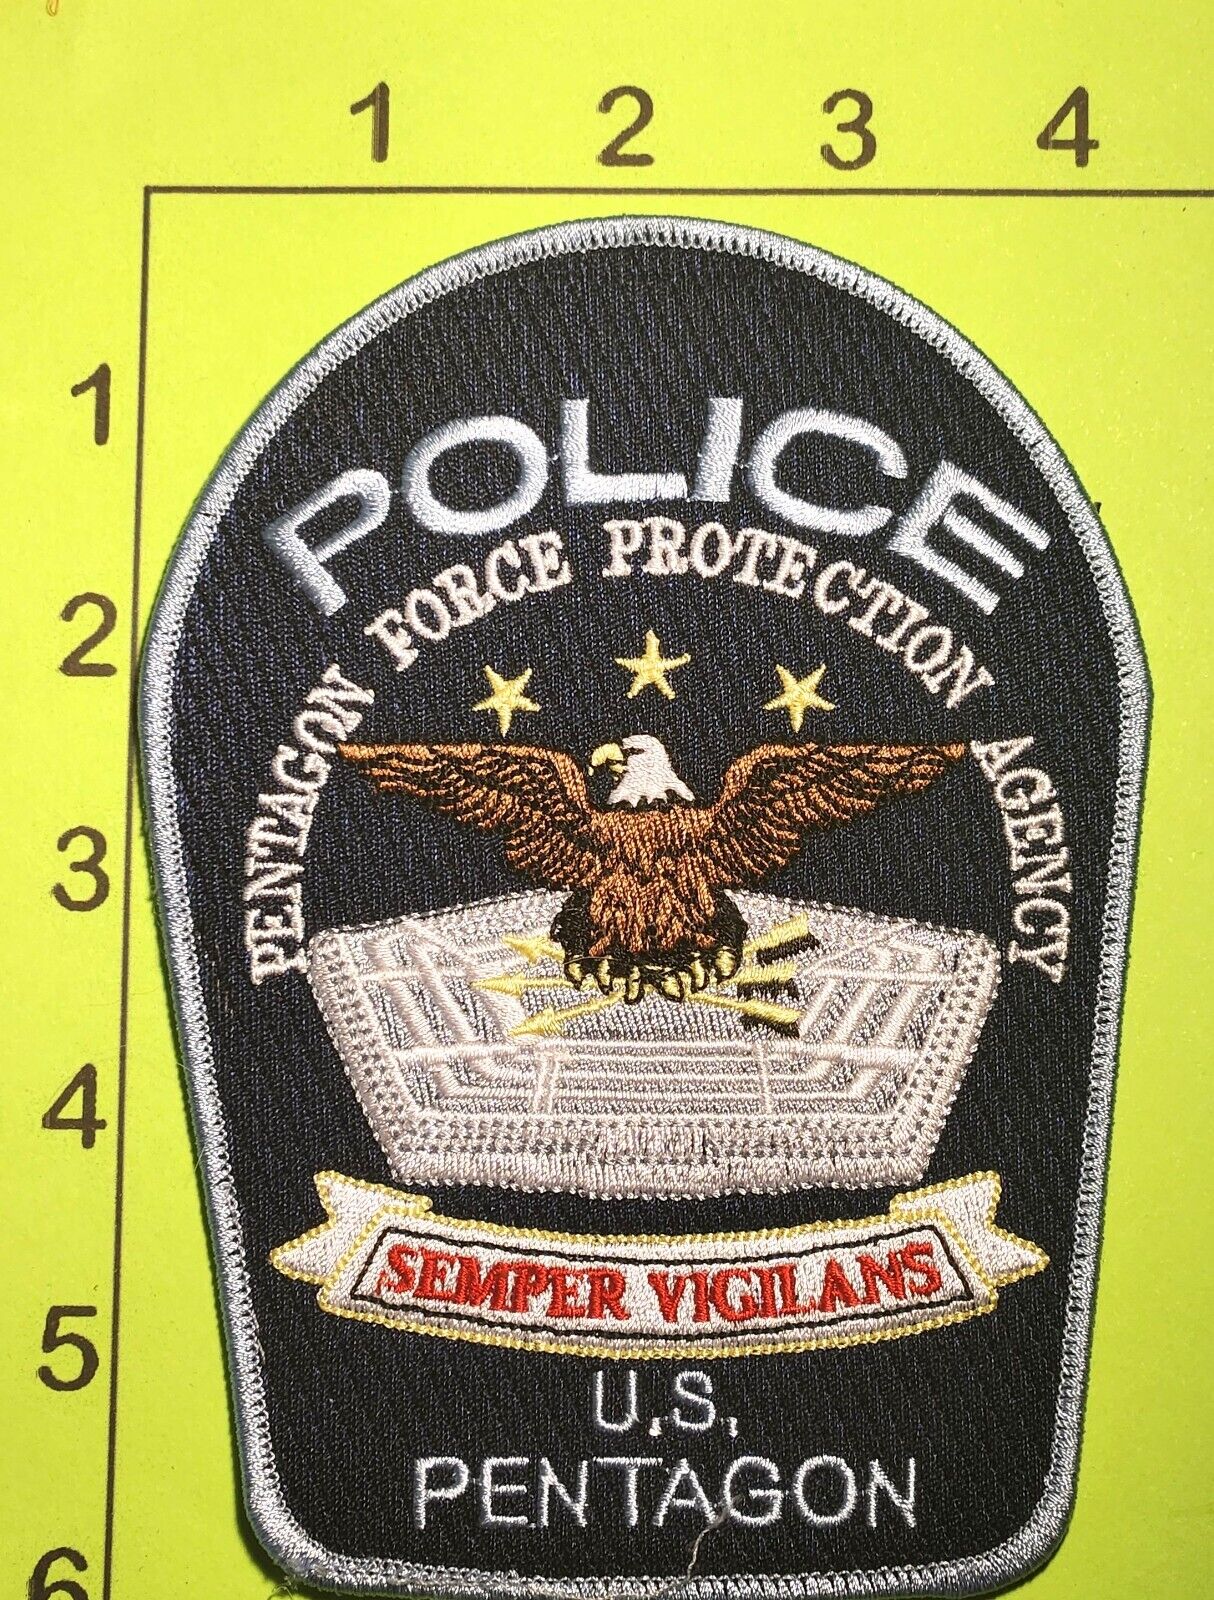 Pentagon Force Protection Vintage Embroidered Sew on Police Shoulder Patch D.C.